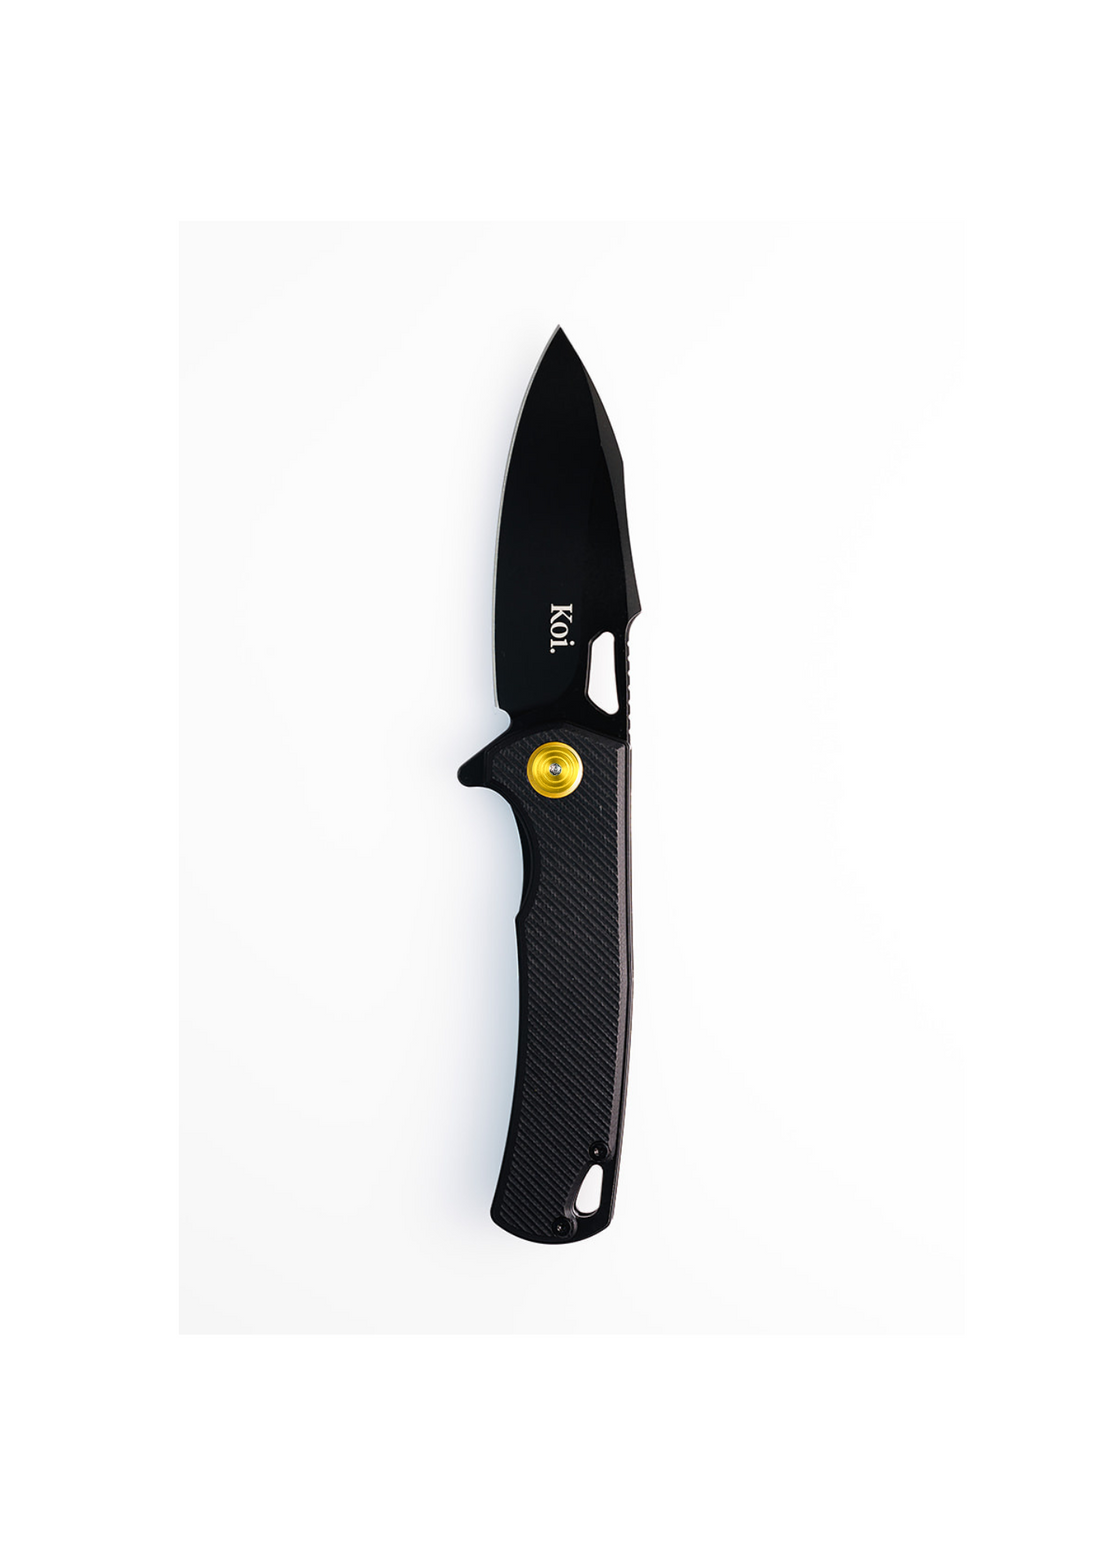 The "Noah" Pocket Knife - 1 - Koi Knives